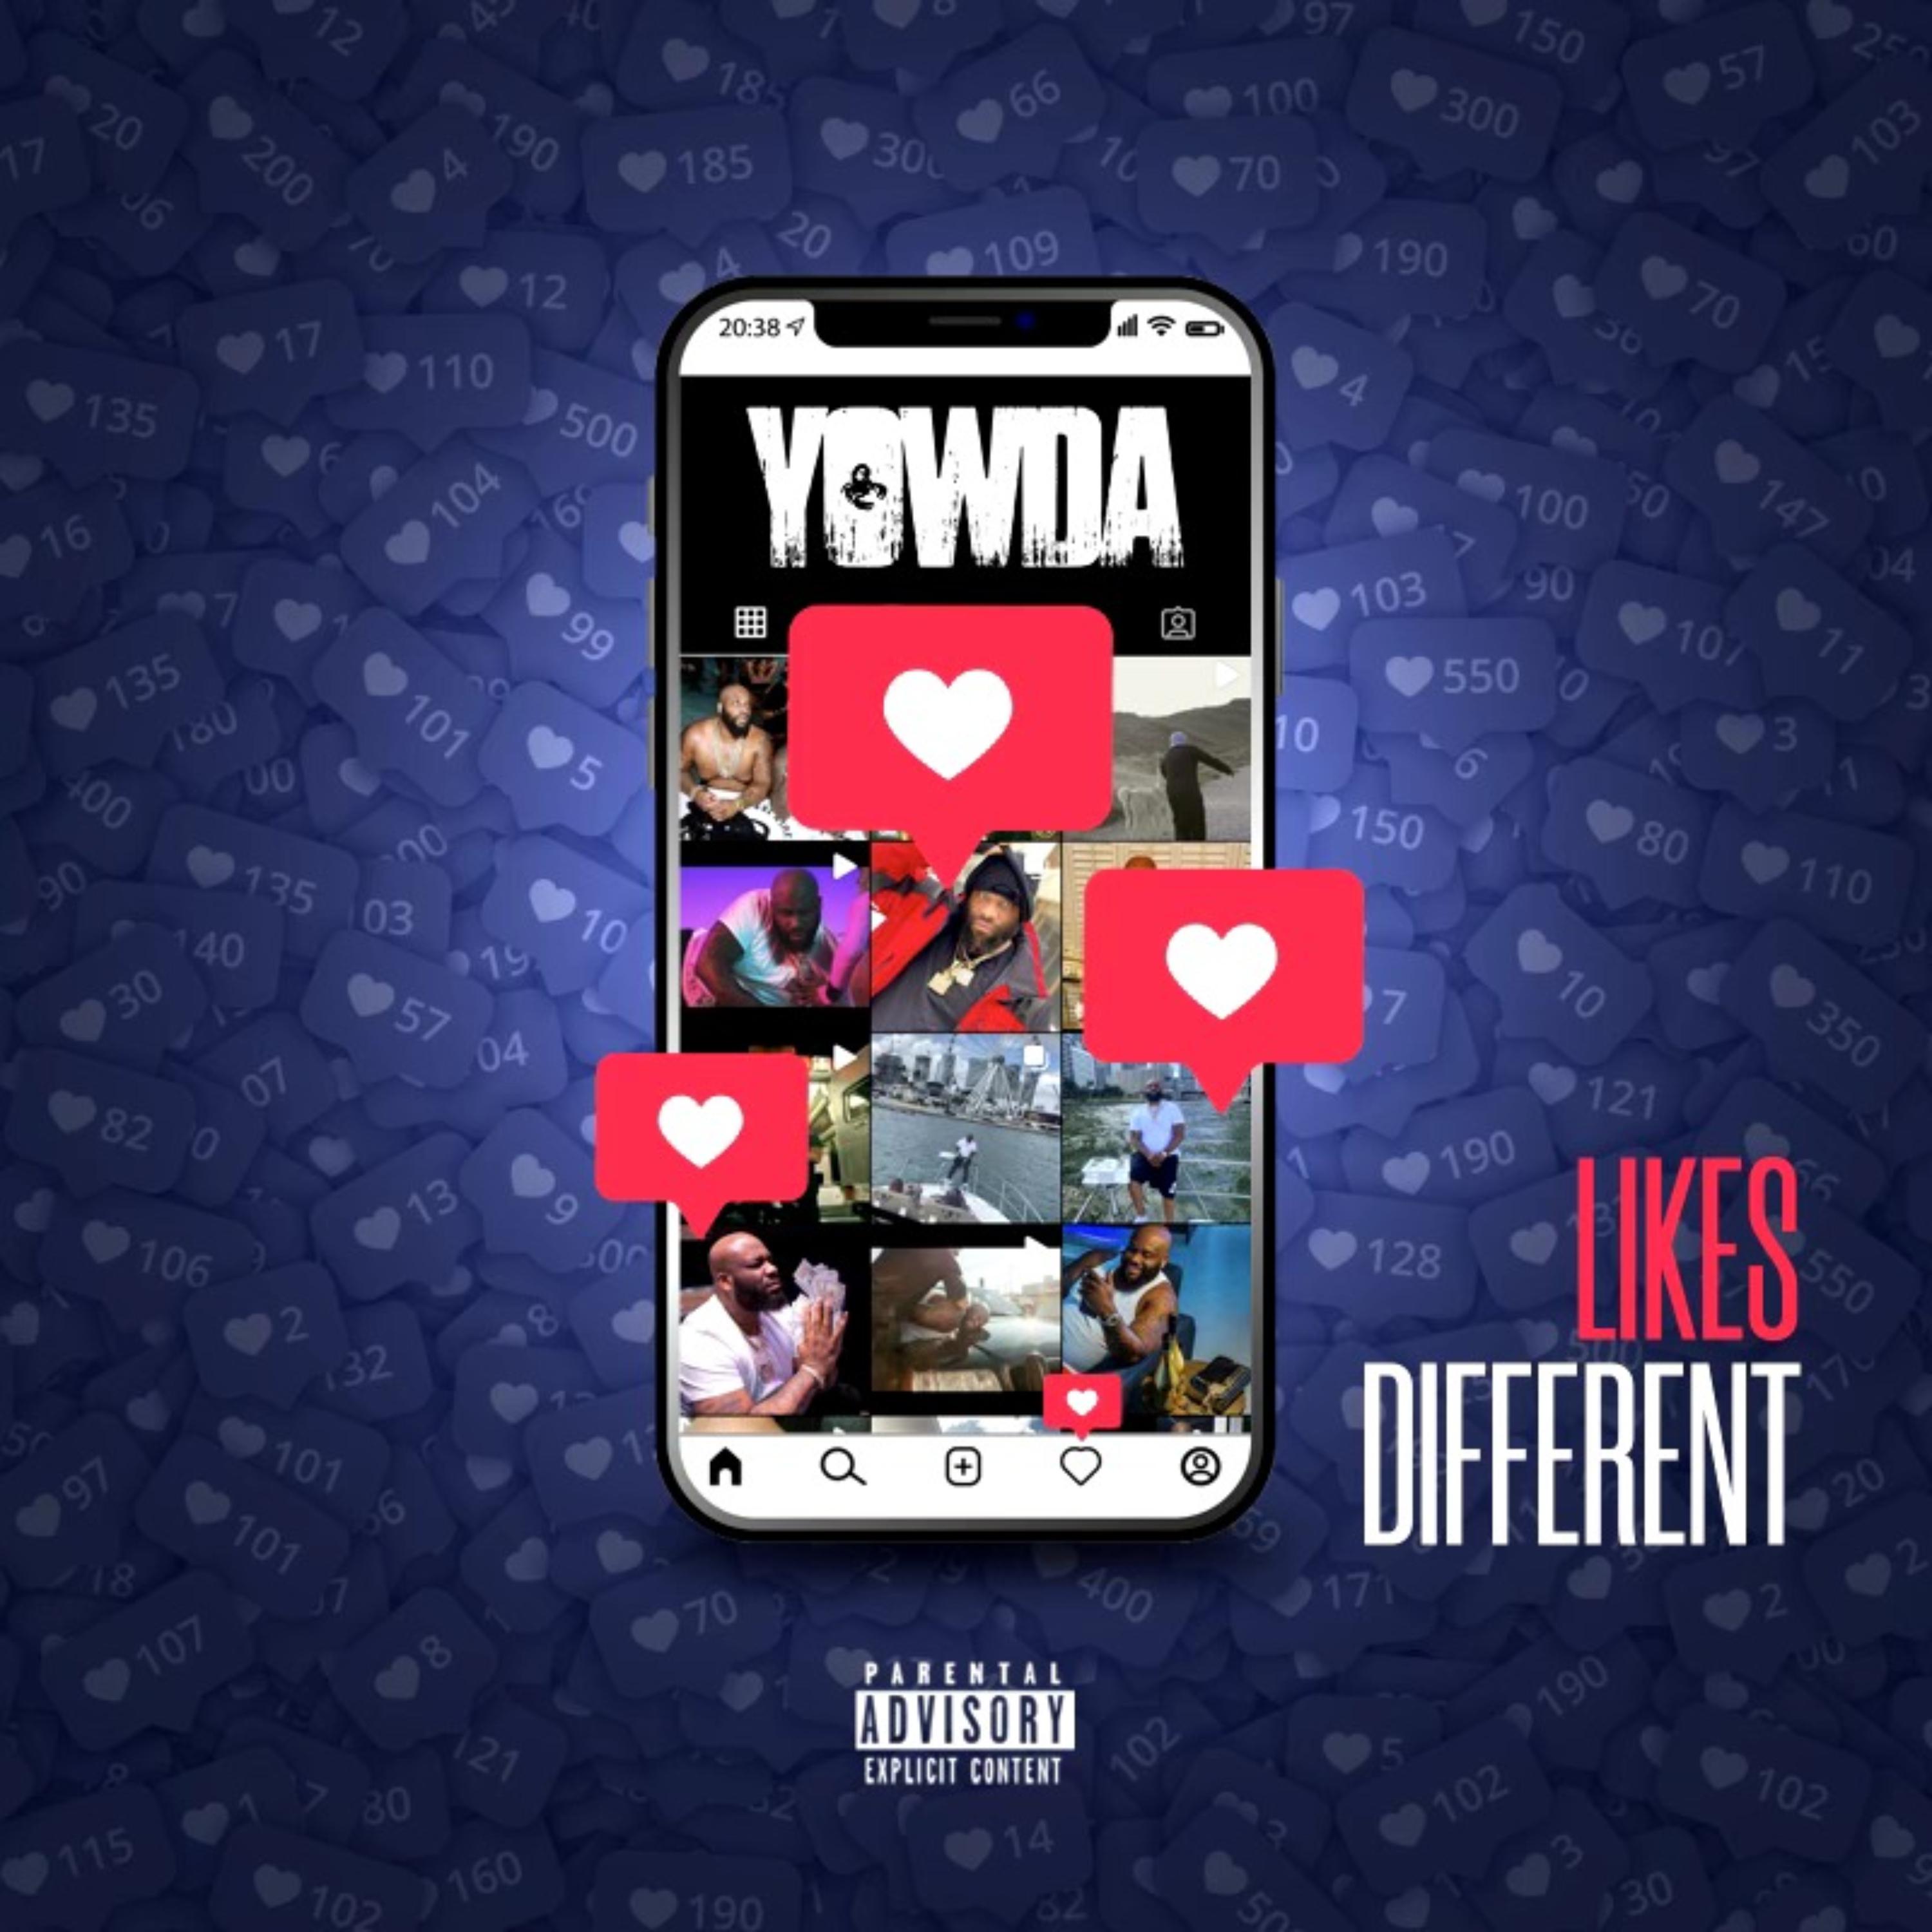 Yowda - Likes Different